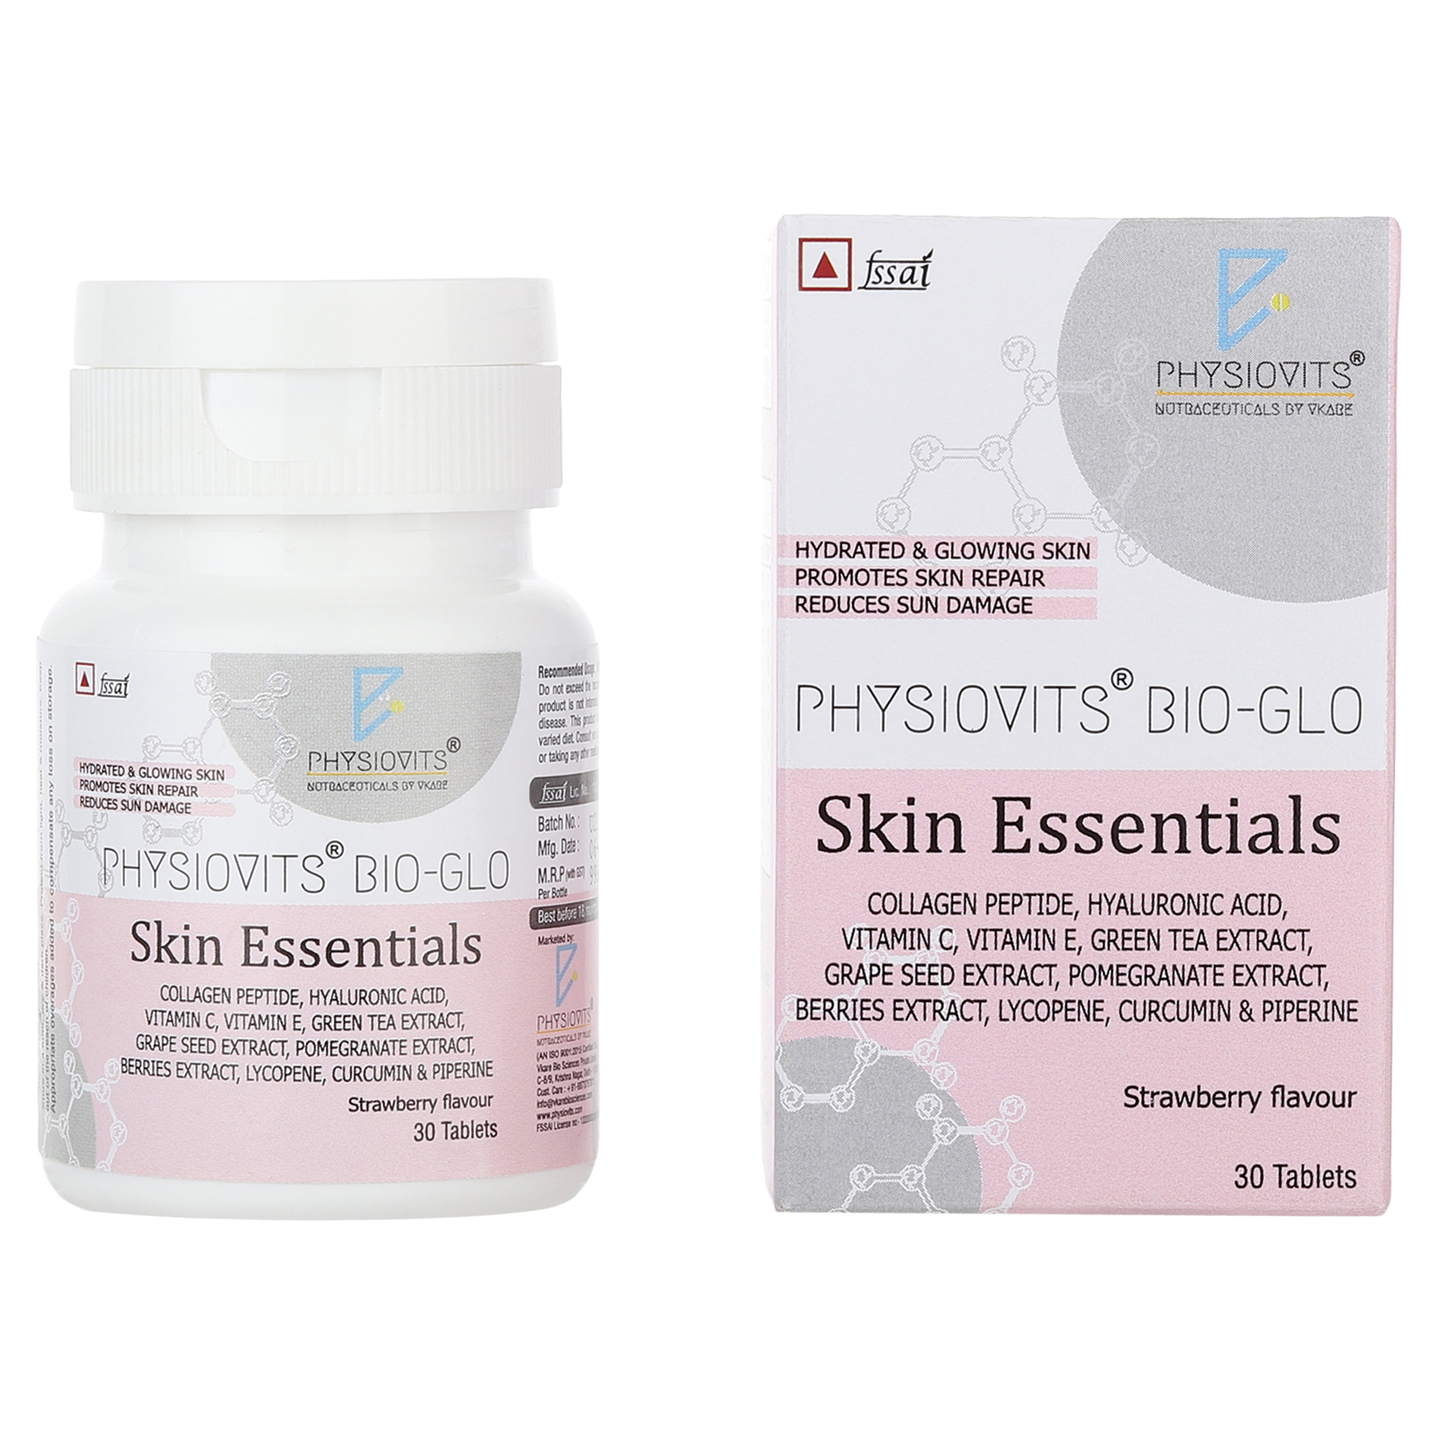 Physiovits Bio-Glo Skin Essentials - Box of 30 Tablets